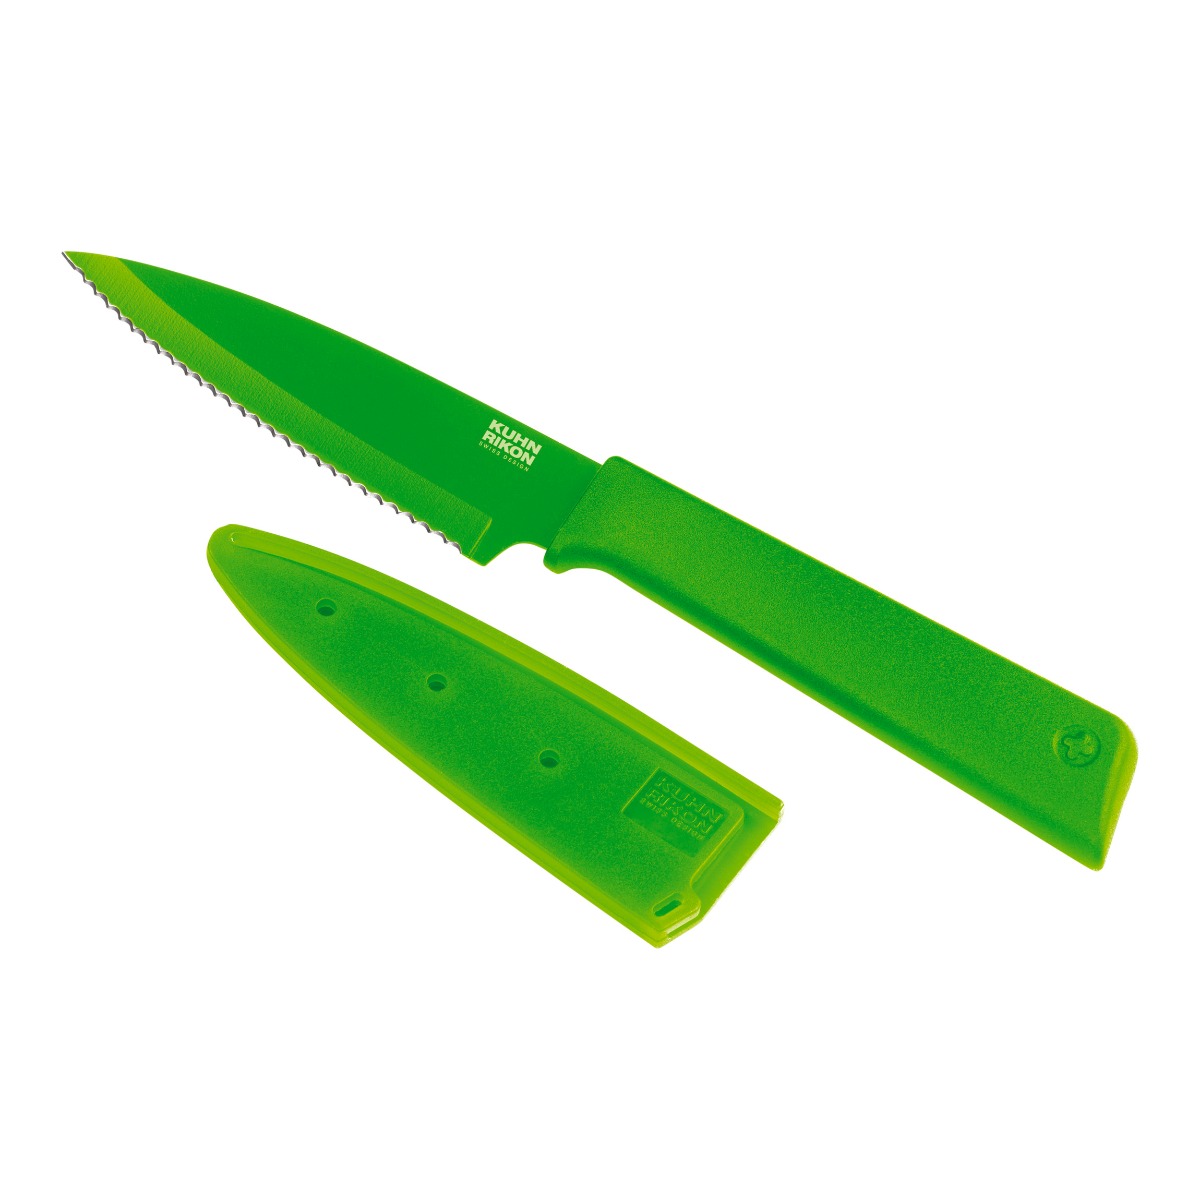 Kuhn Rikon - Colori(r)+ Serrated Paring Knife green